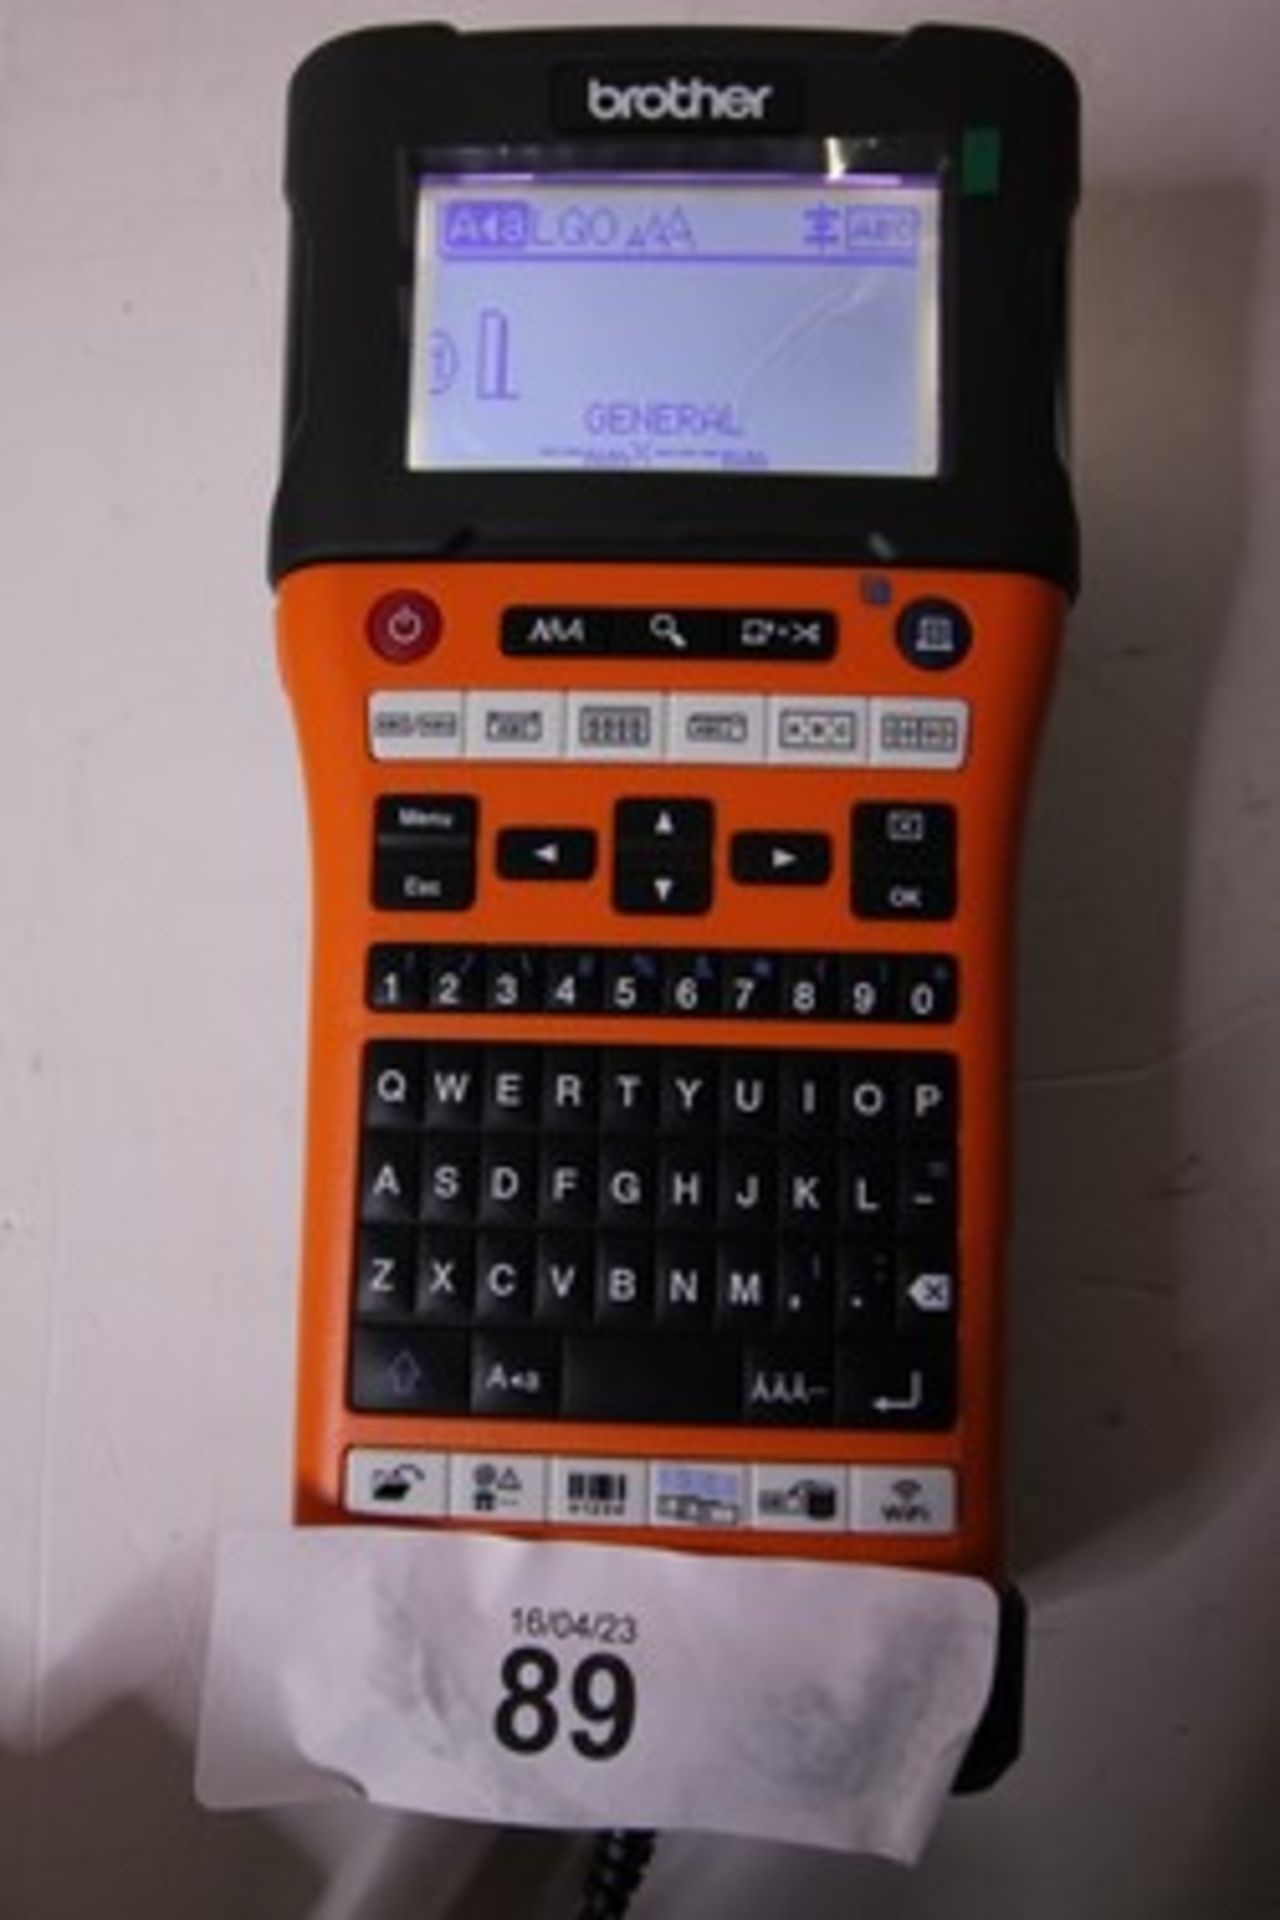 1 x Brother P-Touch E550 WNIVP label printer, code 3134320001 - New in box (SW6)